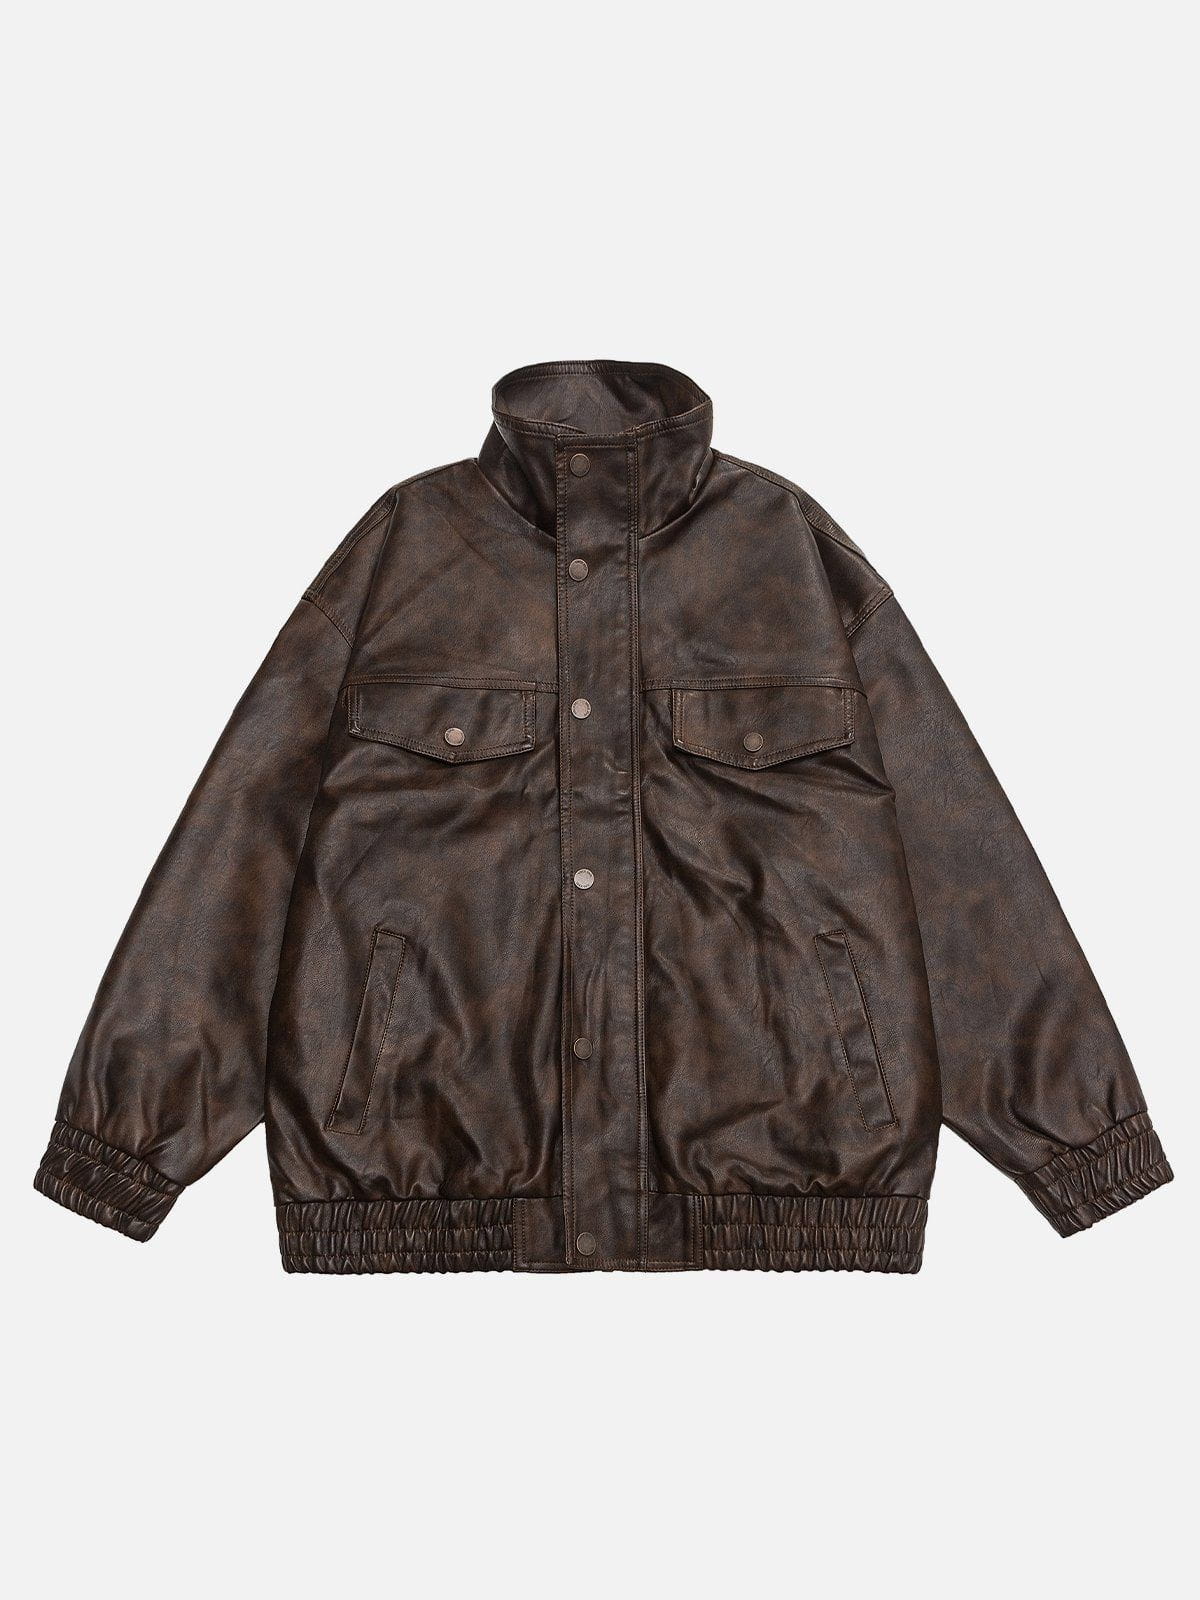 Aelfric Eden Vintage Washed Faux Leather Jacket – Aelfric eden